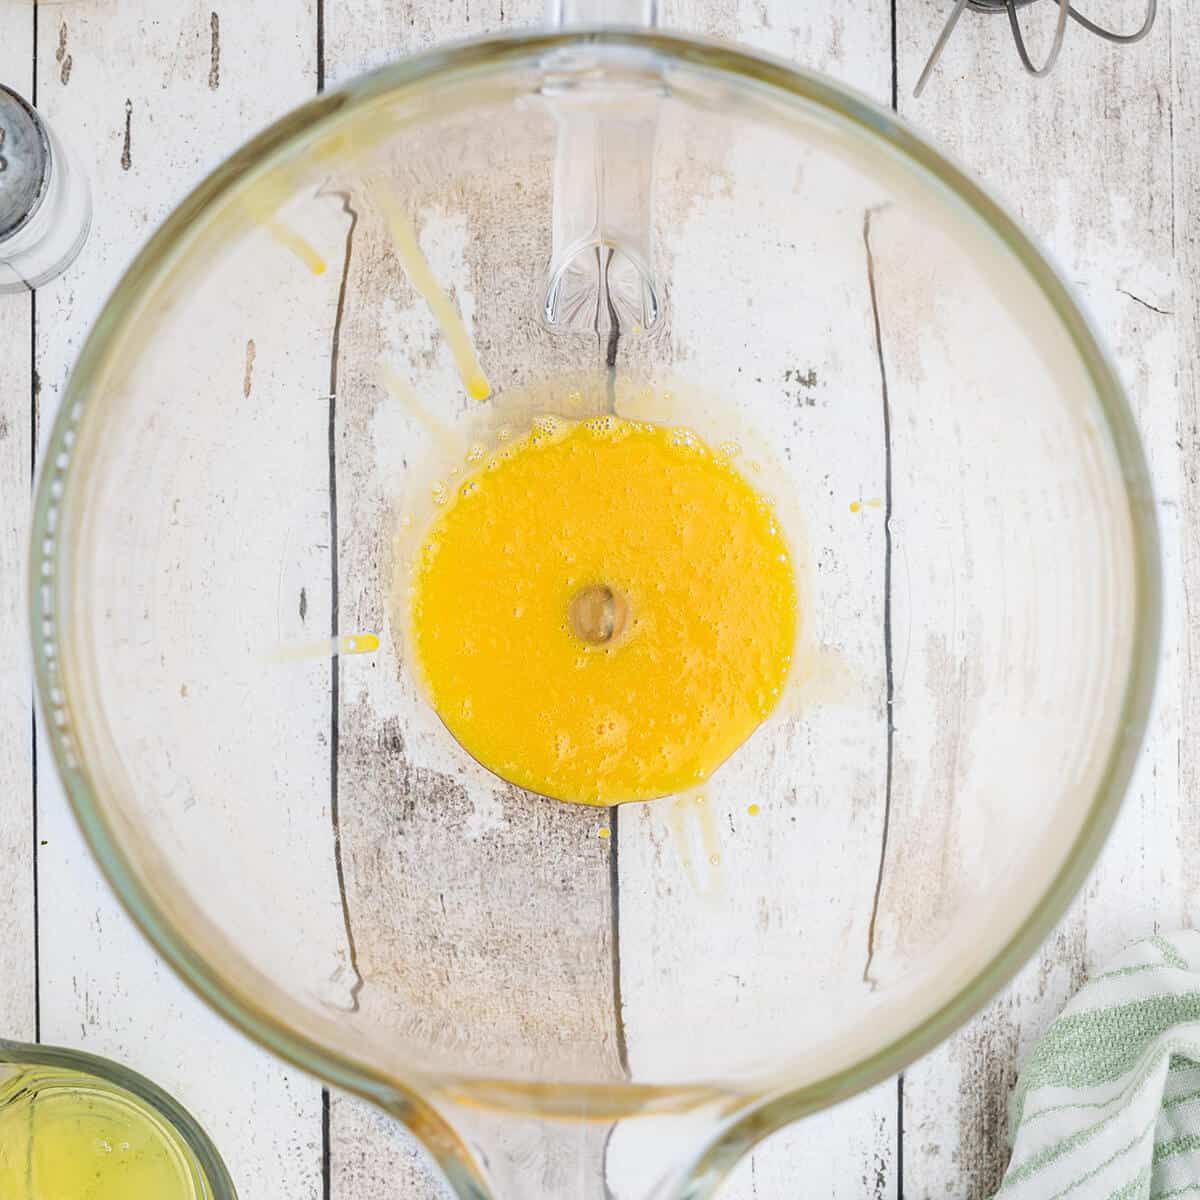 Beaten egg yolks in a glass bowl.